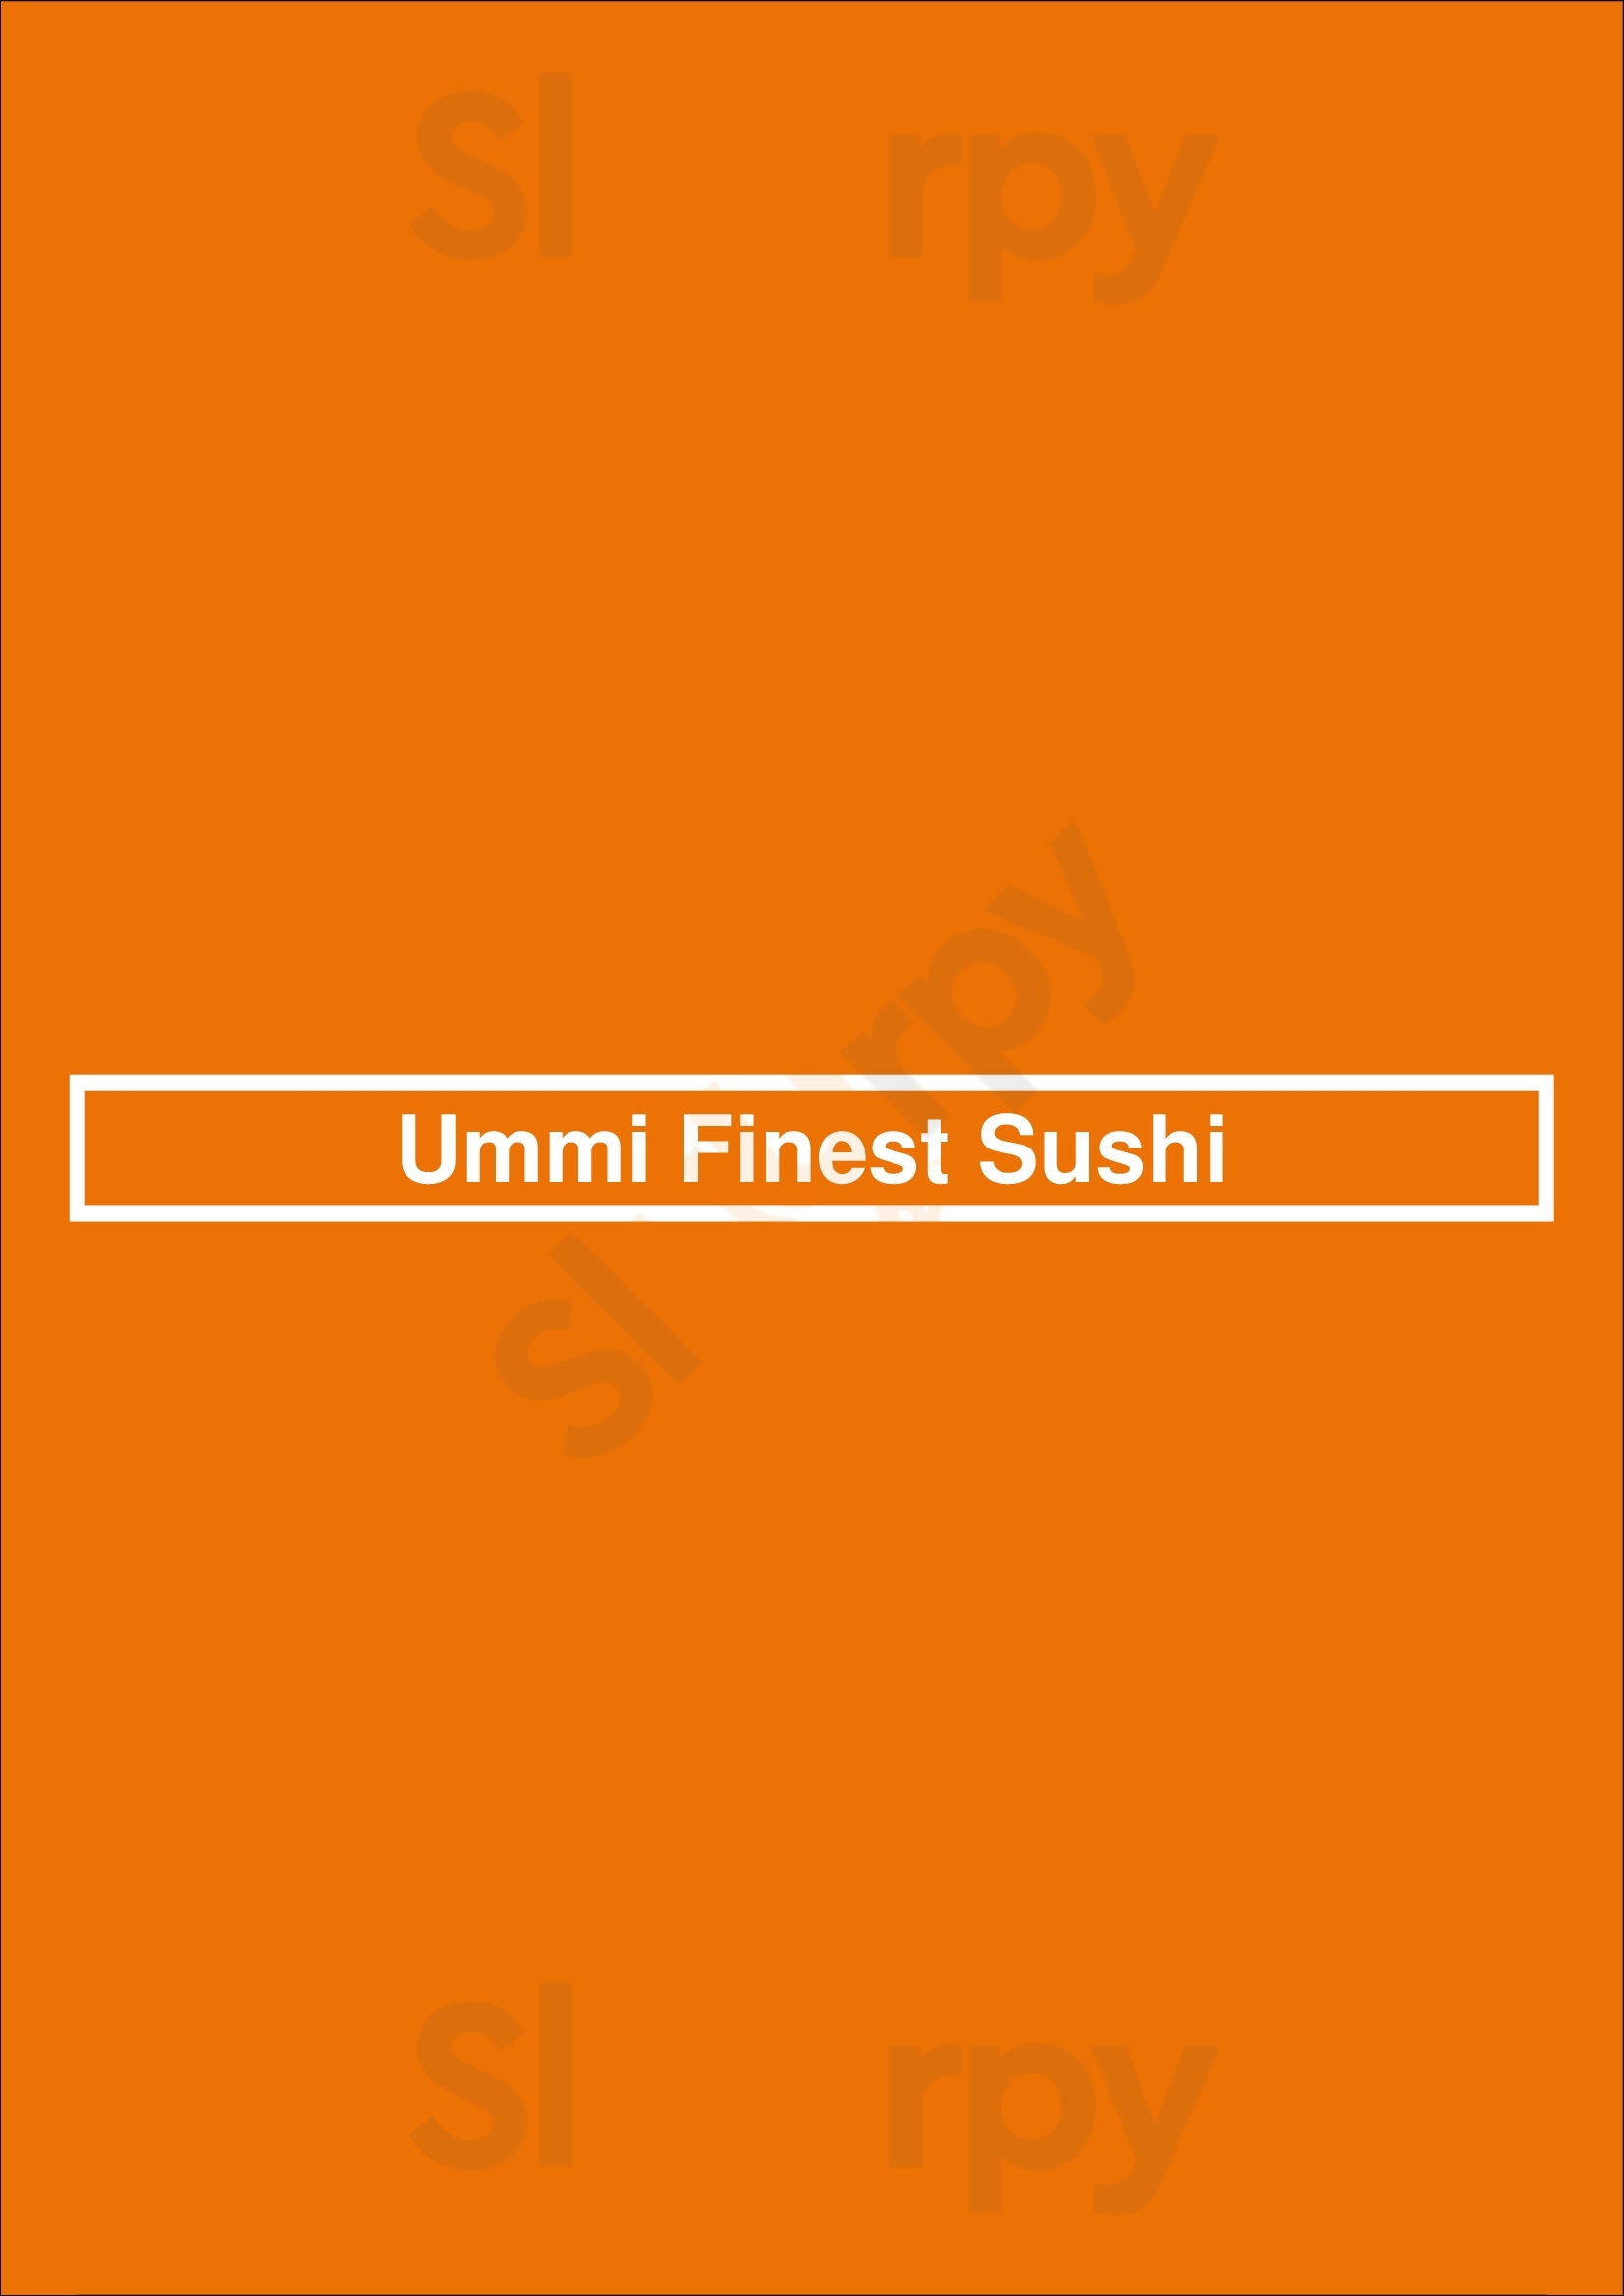 Ummi Finest Sushi São Paulo Menu - 1